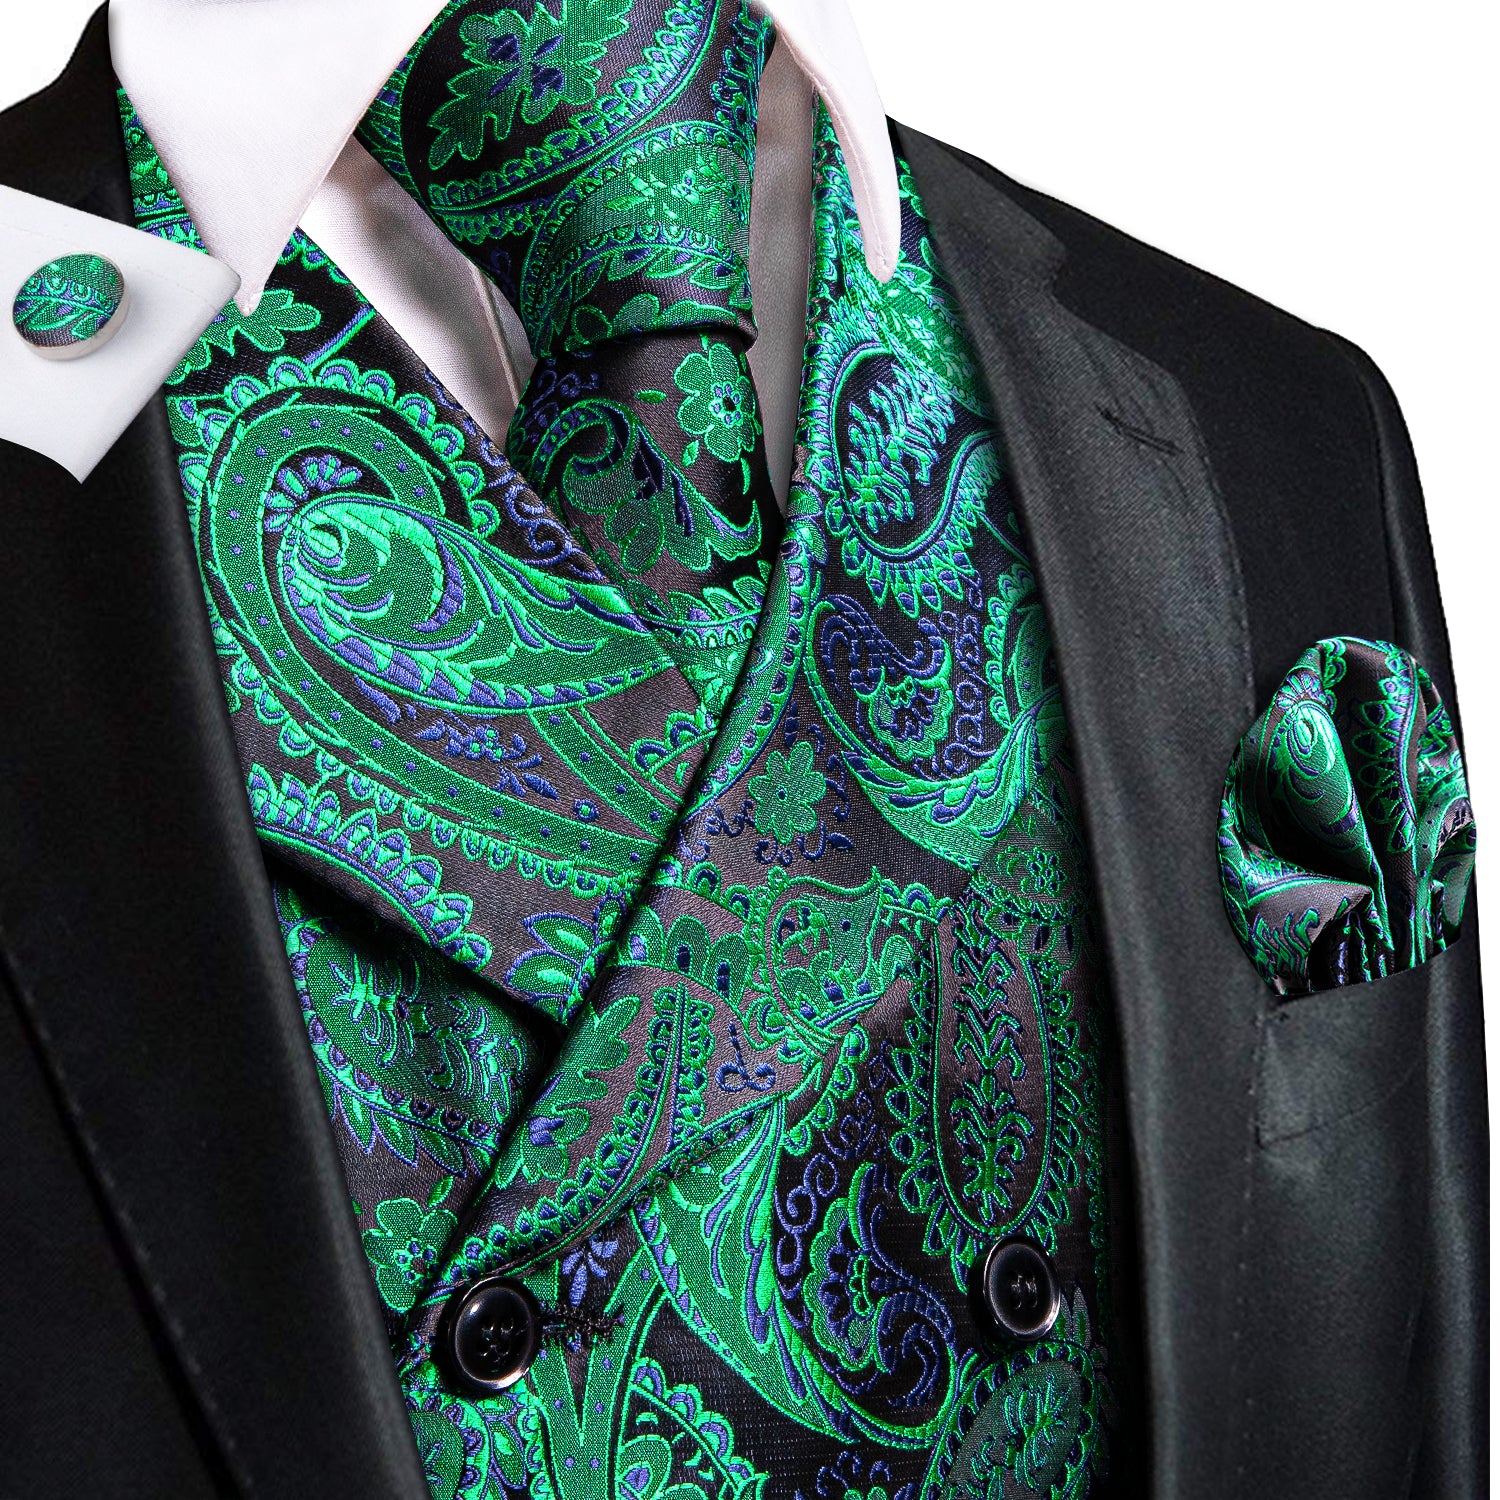 Green Purple Black Paisley Silk Men's Vest Hanky Cufflinks Tie Set Waistcoat Suit Set